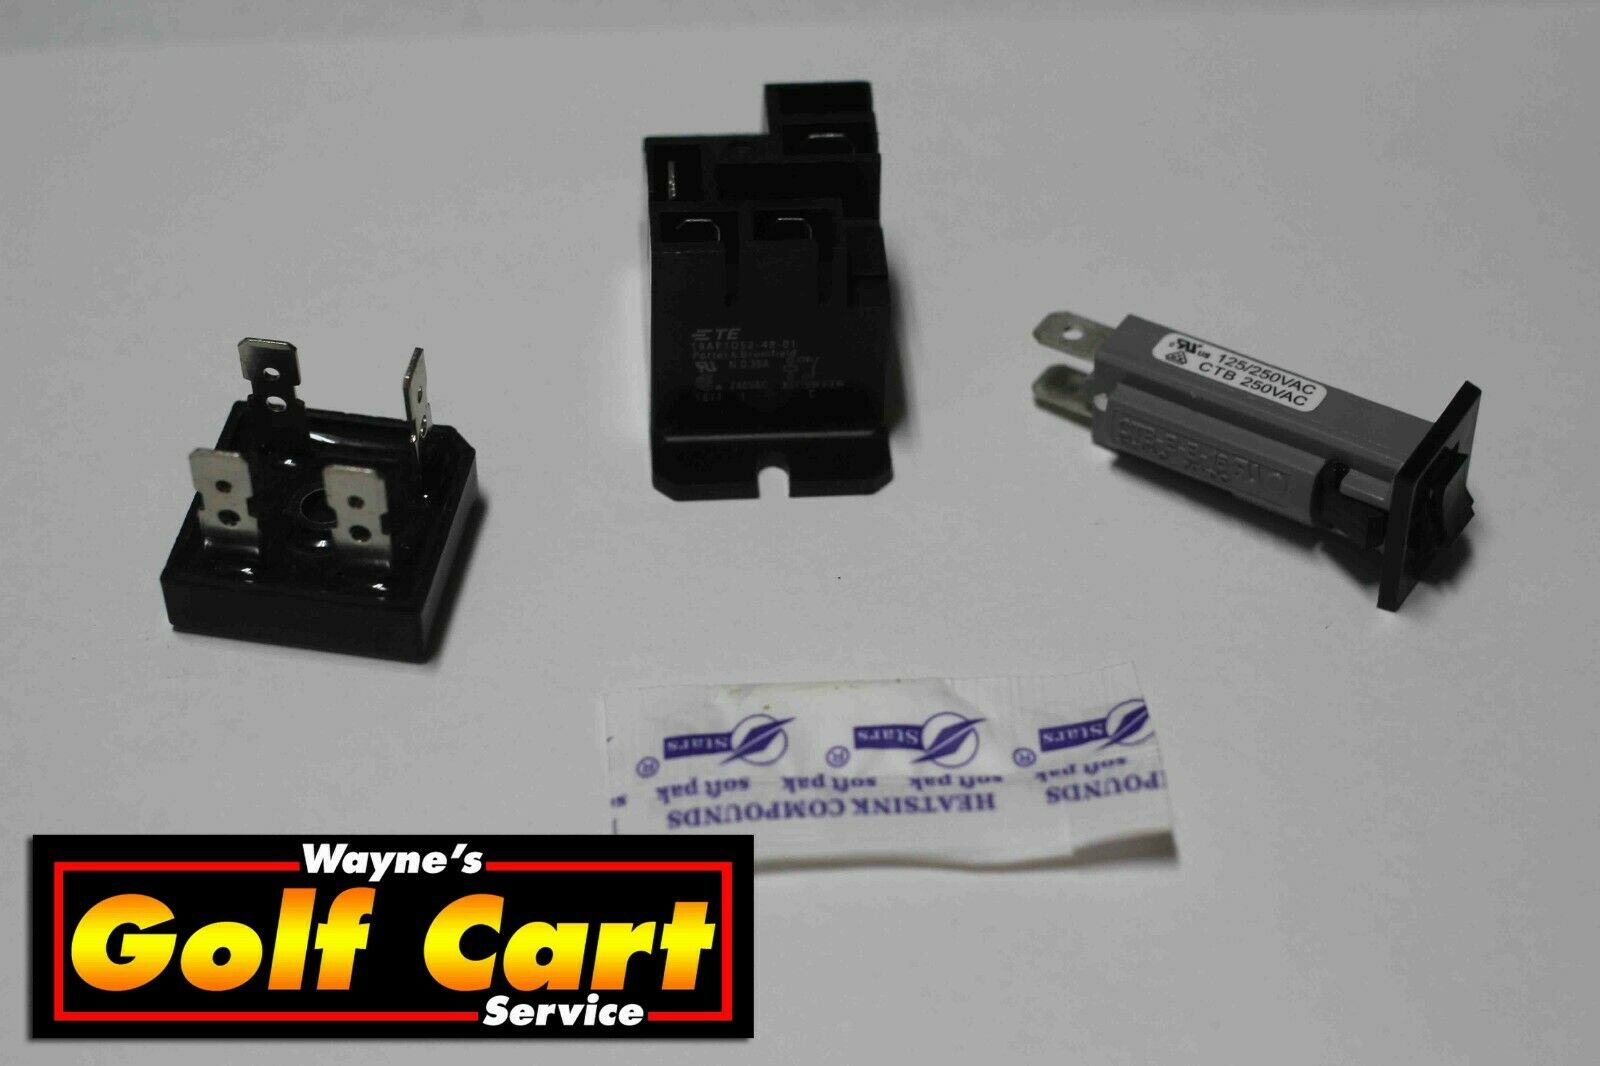 Club car battery charger repair kit Powerdrive 2 Model 22110 Heavy Dut –  Wayne's Golf Cart Parts